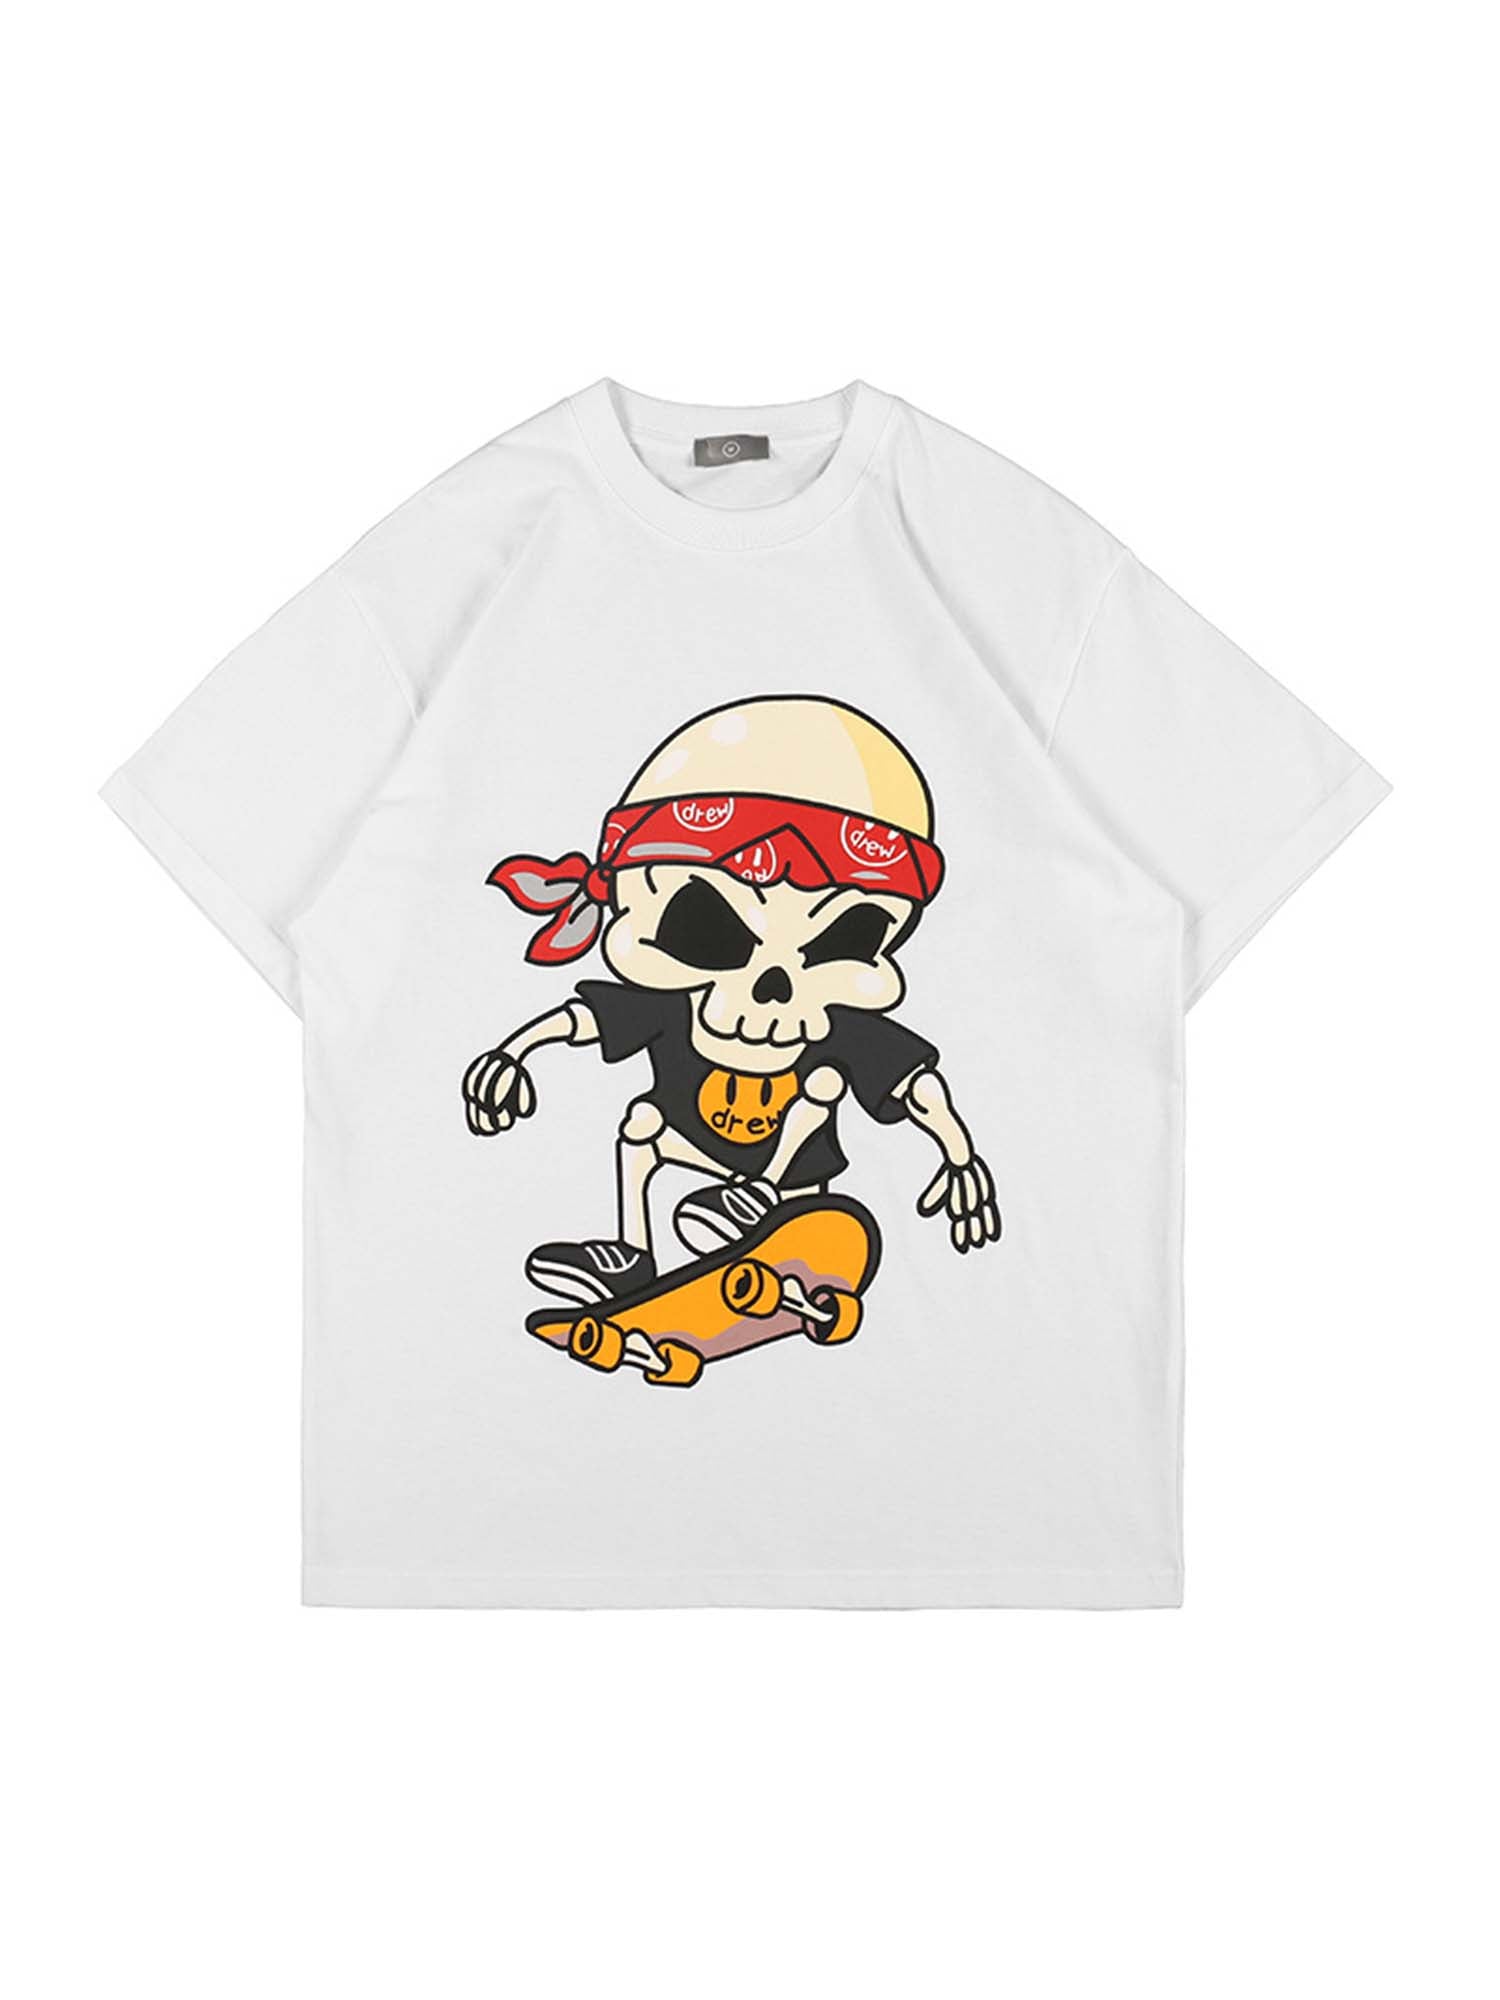 JUSTNOTAG Skateboard Skeleton Boy Print Cotton Short Sleeve Tee